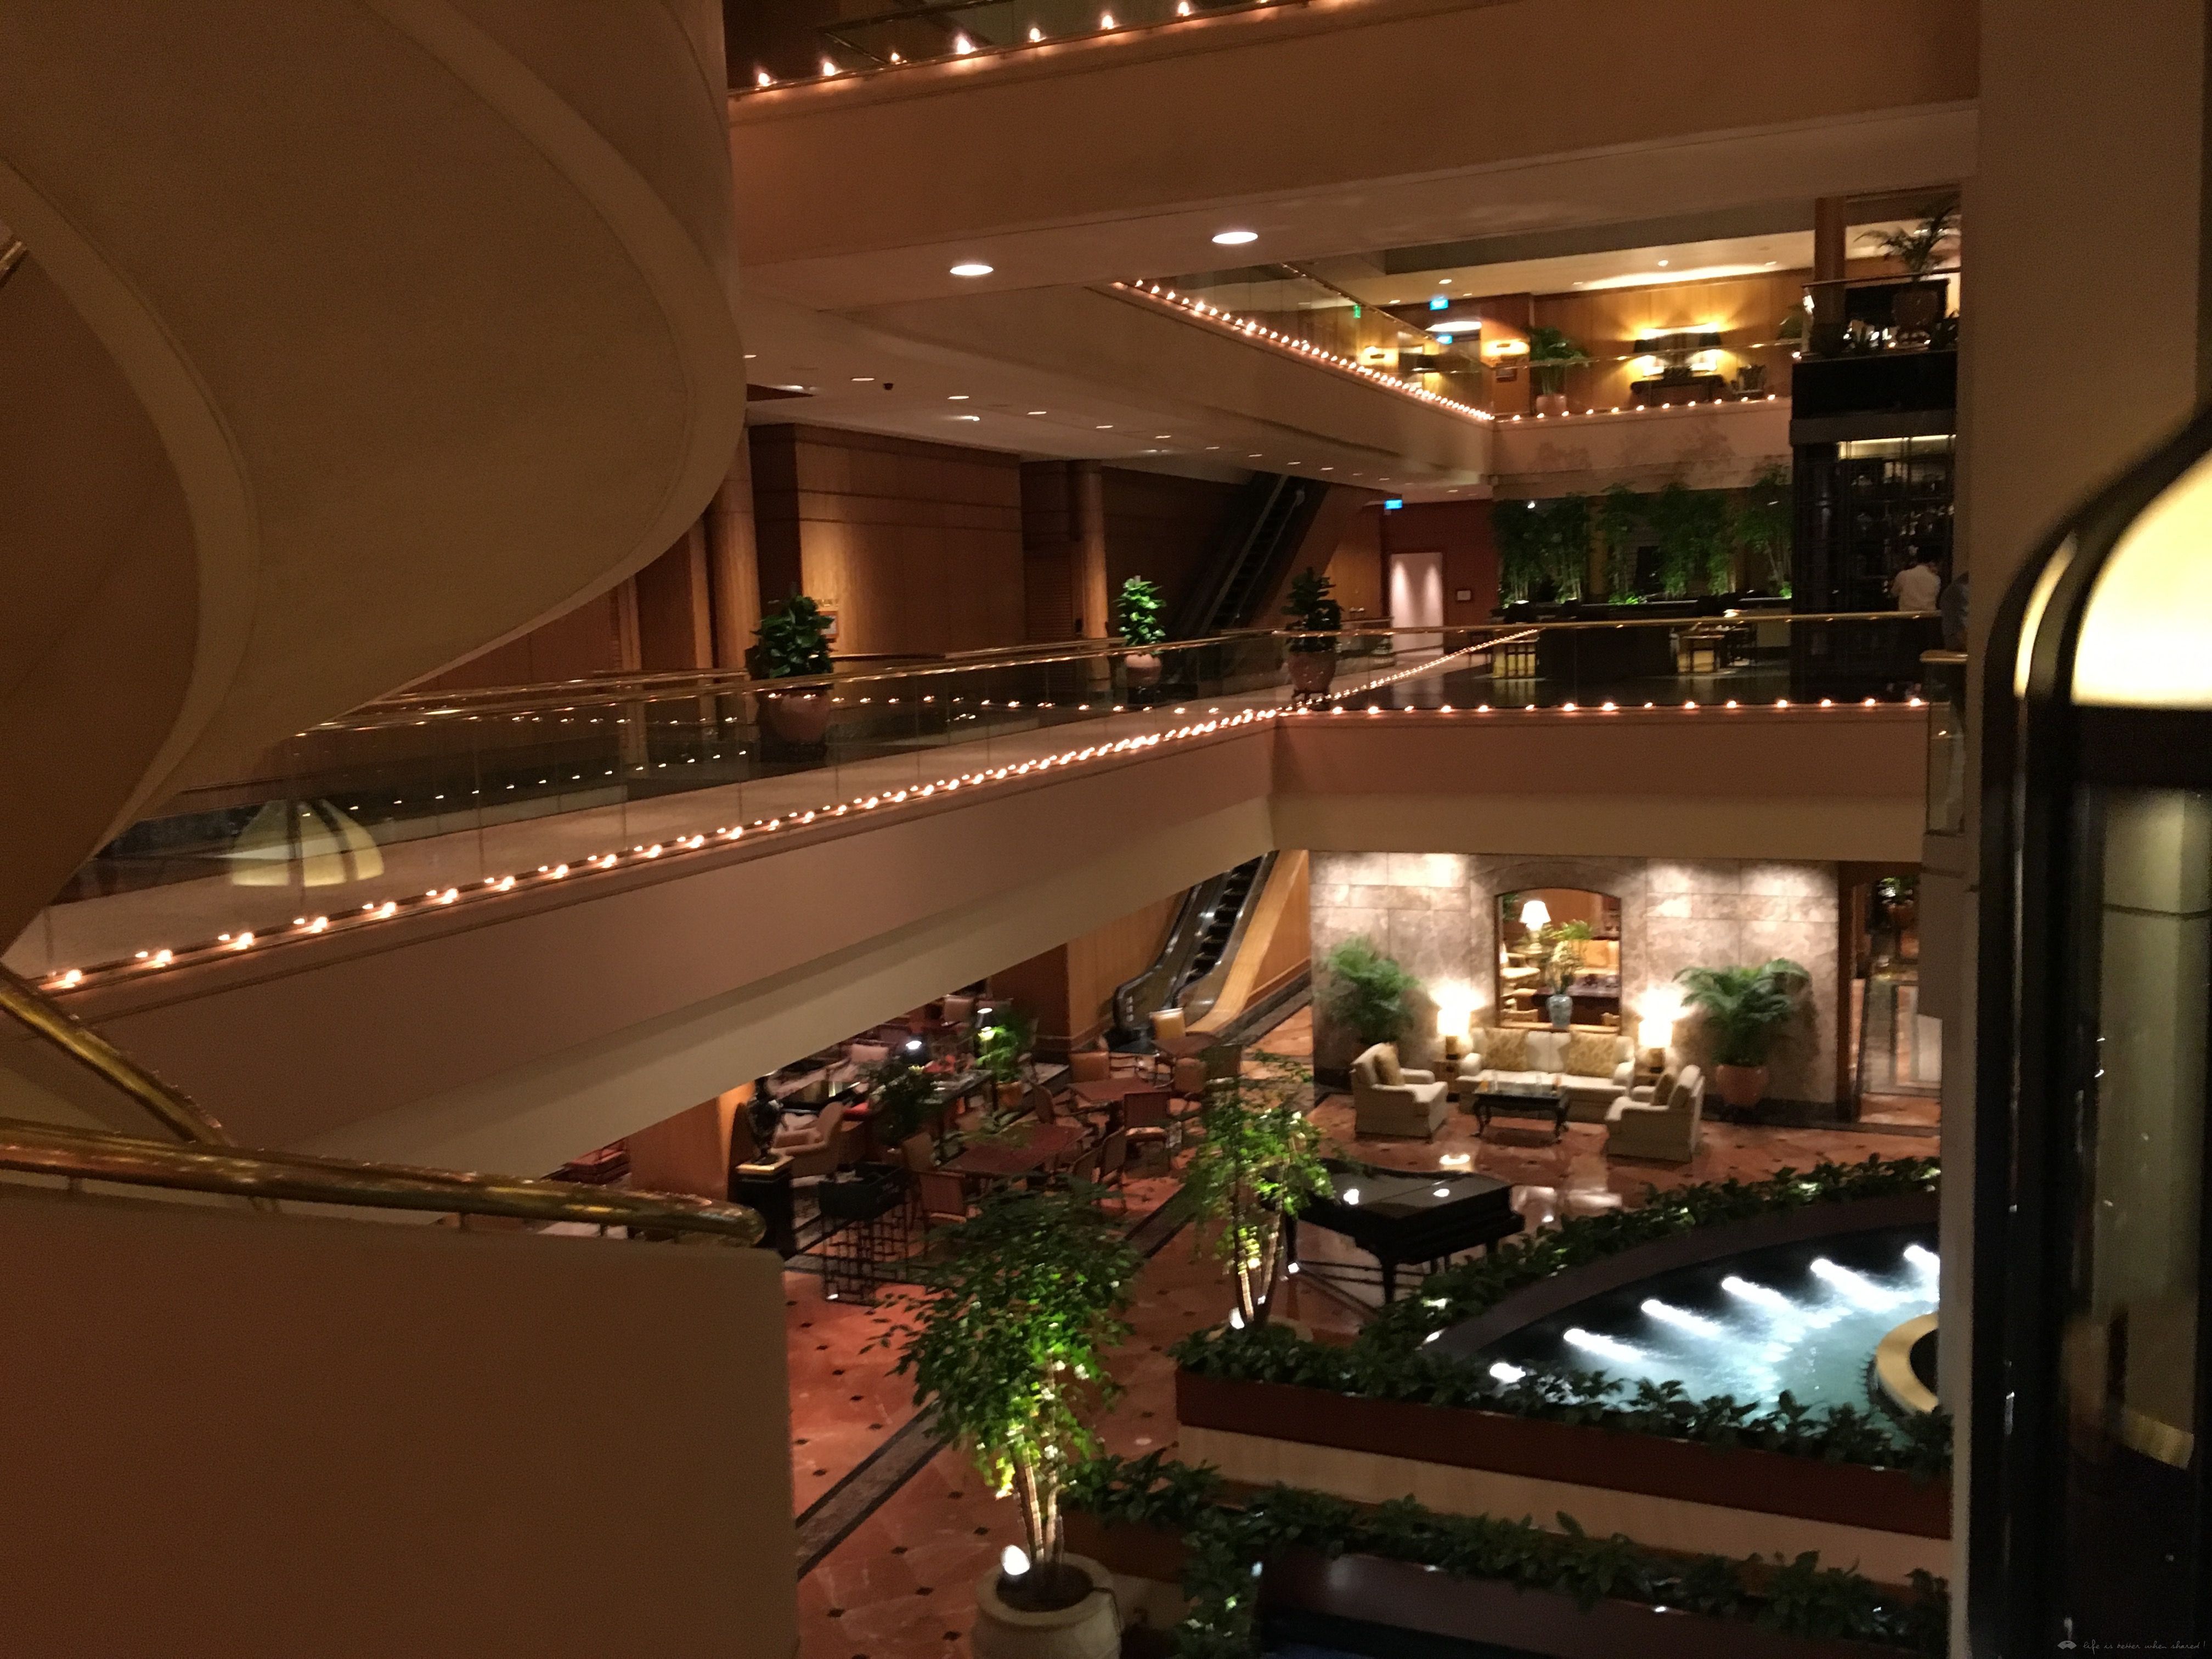 ¼Ƶ Regent Singapore, a Four Seasons Hotel[M]